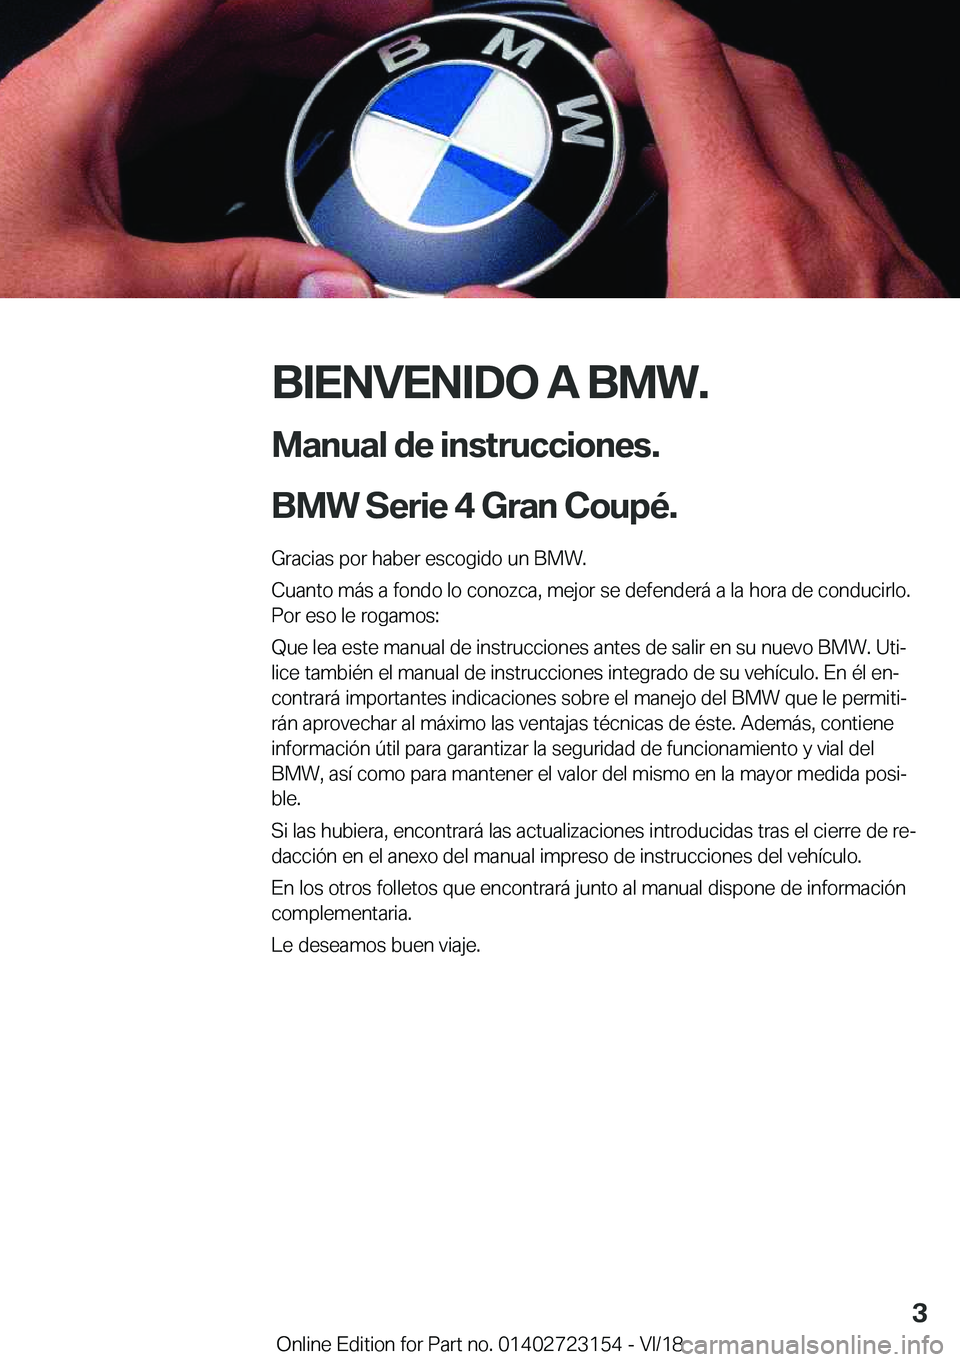 BMW 4 SERIES GRAN COUPE 2019  Manuales de Empleo (in Spanish) �B�I�E�N�V�E�N�I�D�O��A��B�M�W�.
�M�a�n�u�a�l��d�e��i�n�s�t�r�u�c�c�i�o�n�e�s�.
�B�M�W��S�e�r�i�e��4��G�r�a�n��C�o�u�p�